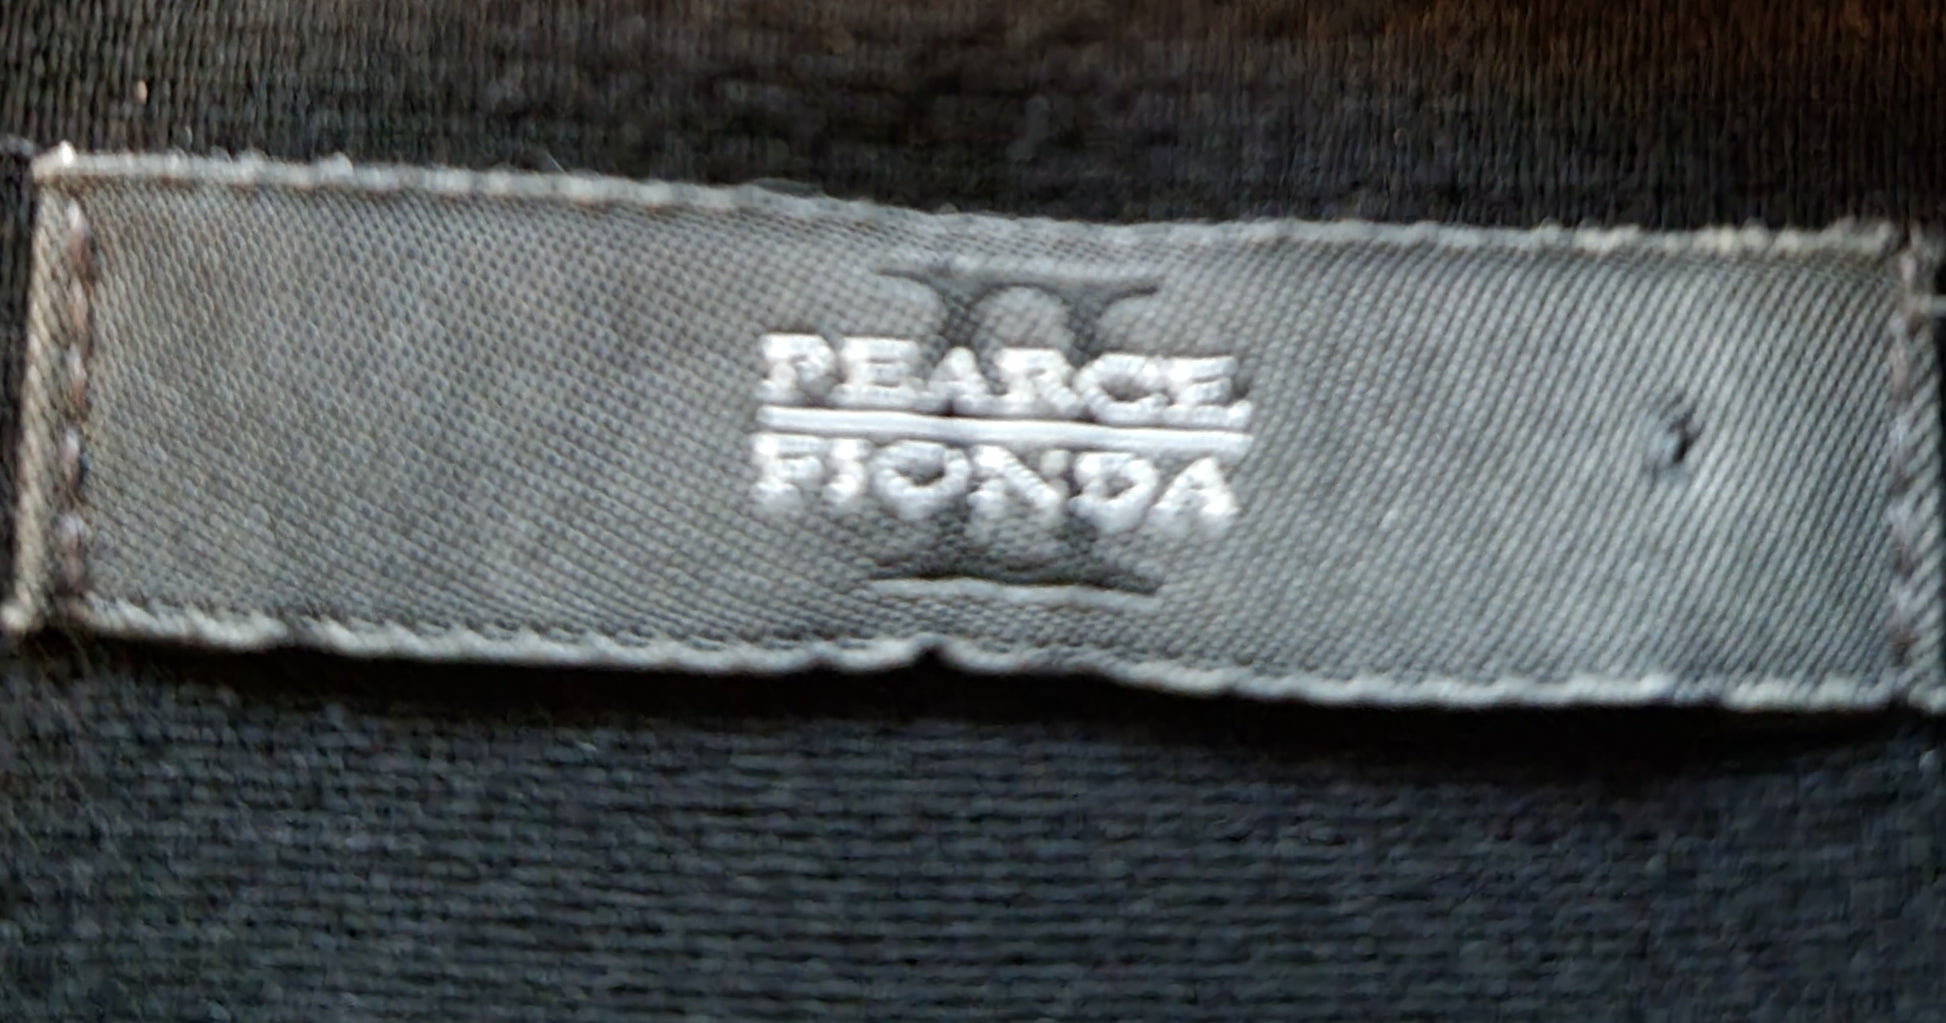 Pearce Fonda Smart Formal Lined Dress UK 12 US 8 EU 40 Timeless Fashions